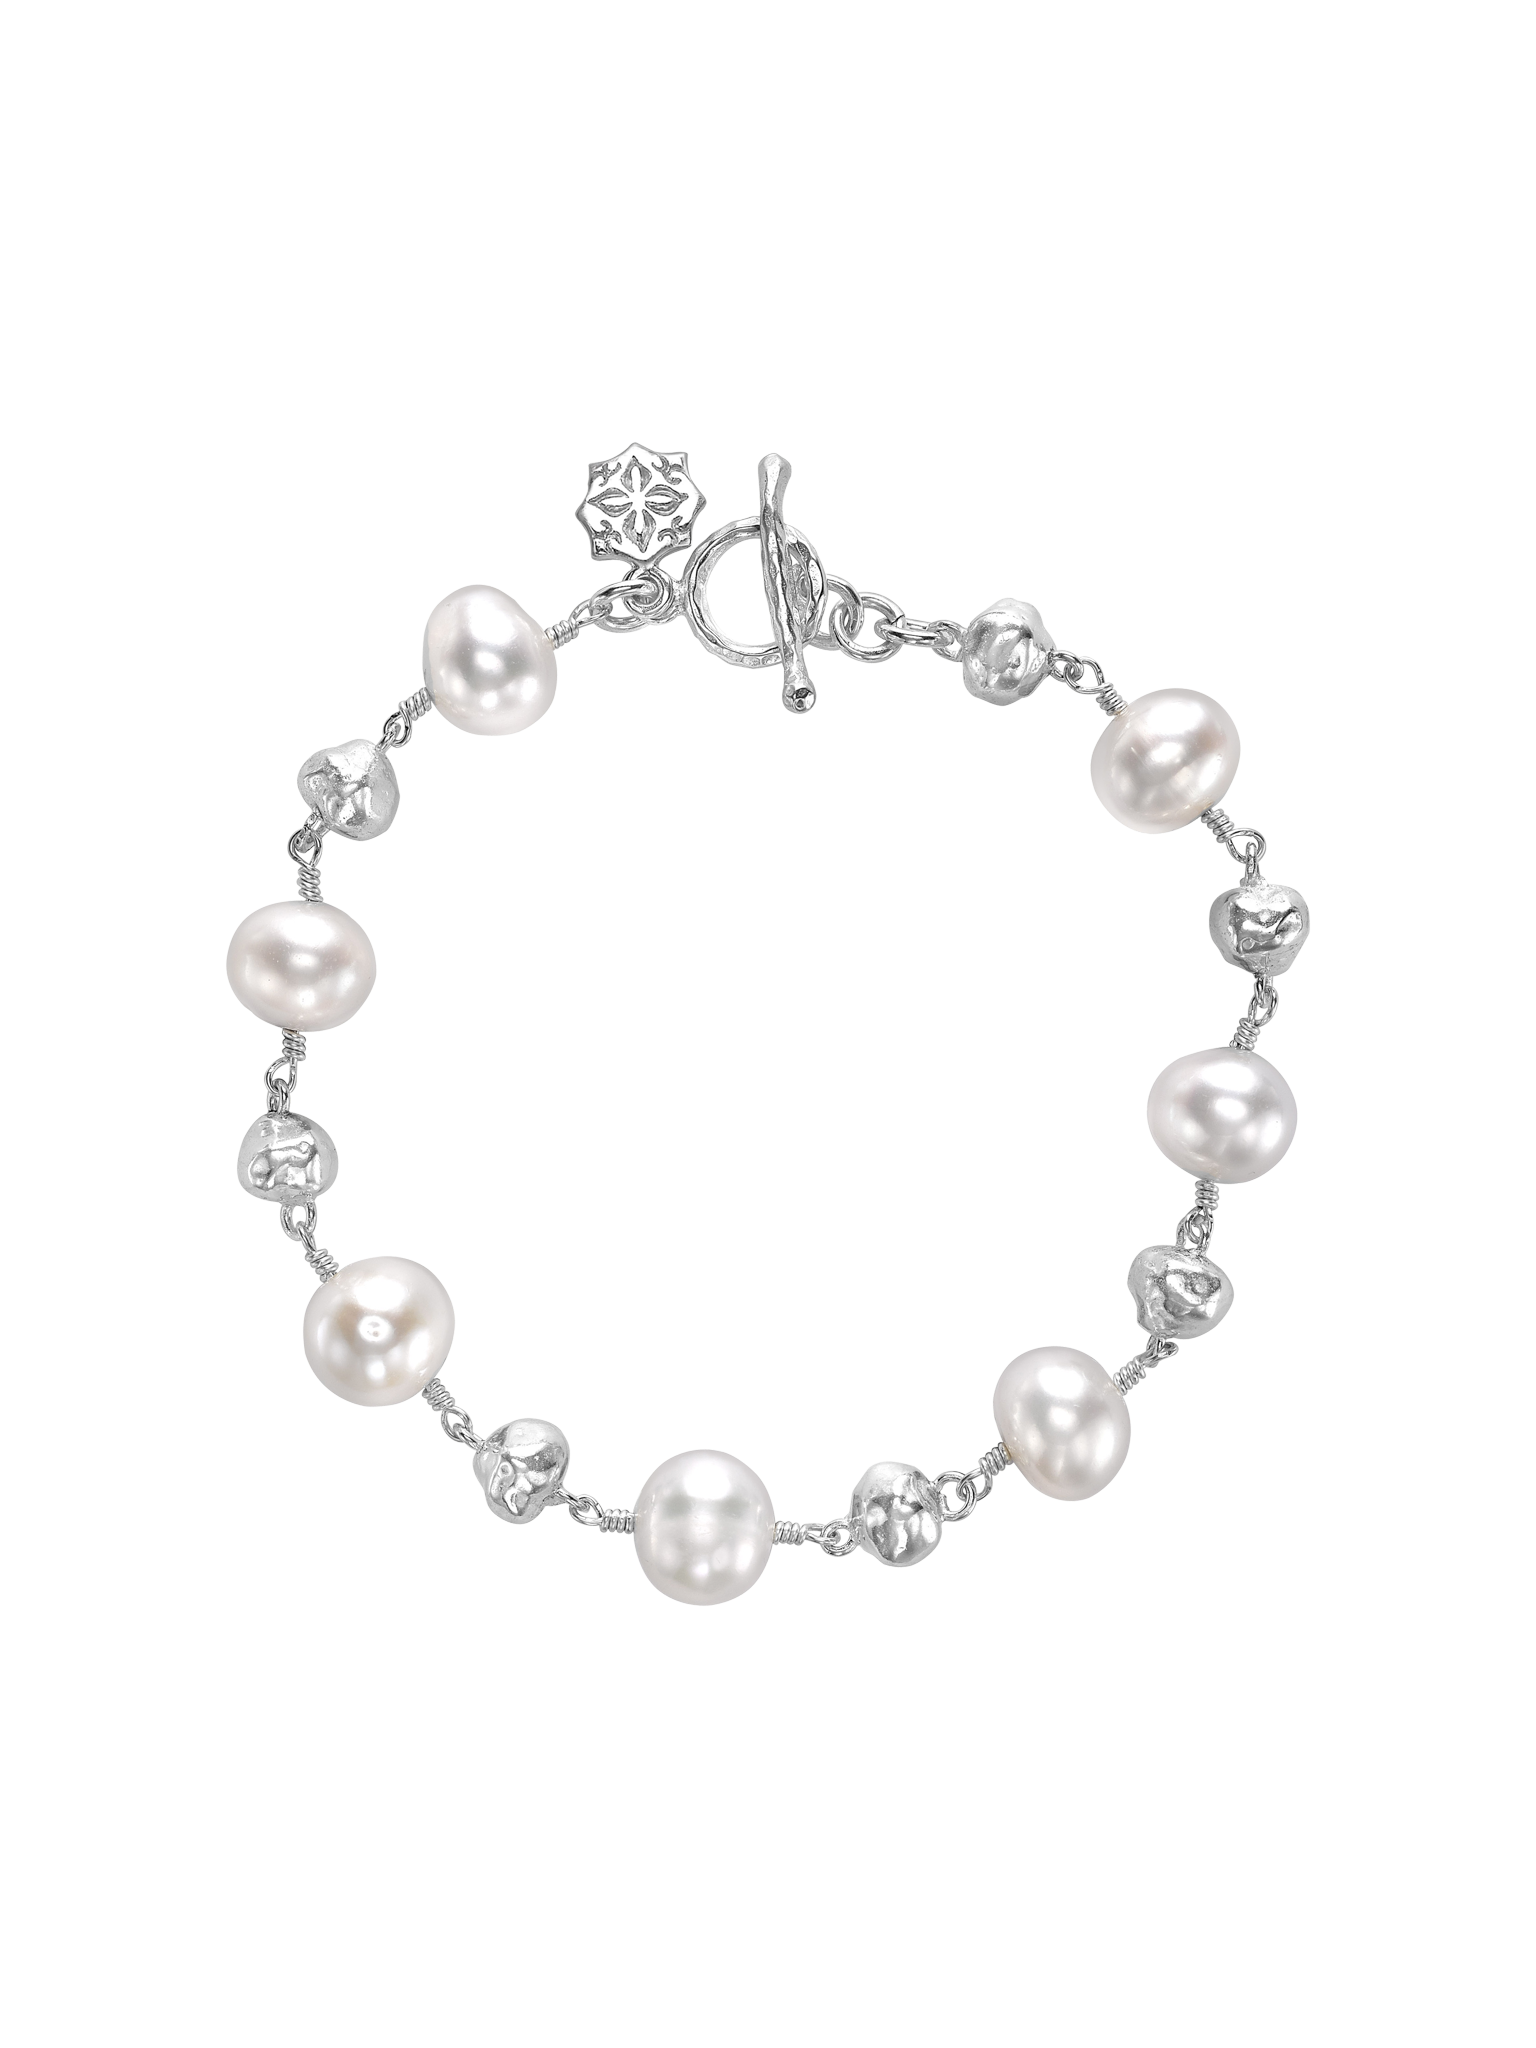 Nugget & white freshwater pearl bracelet